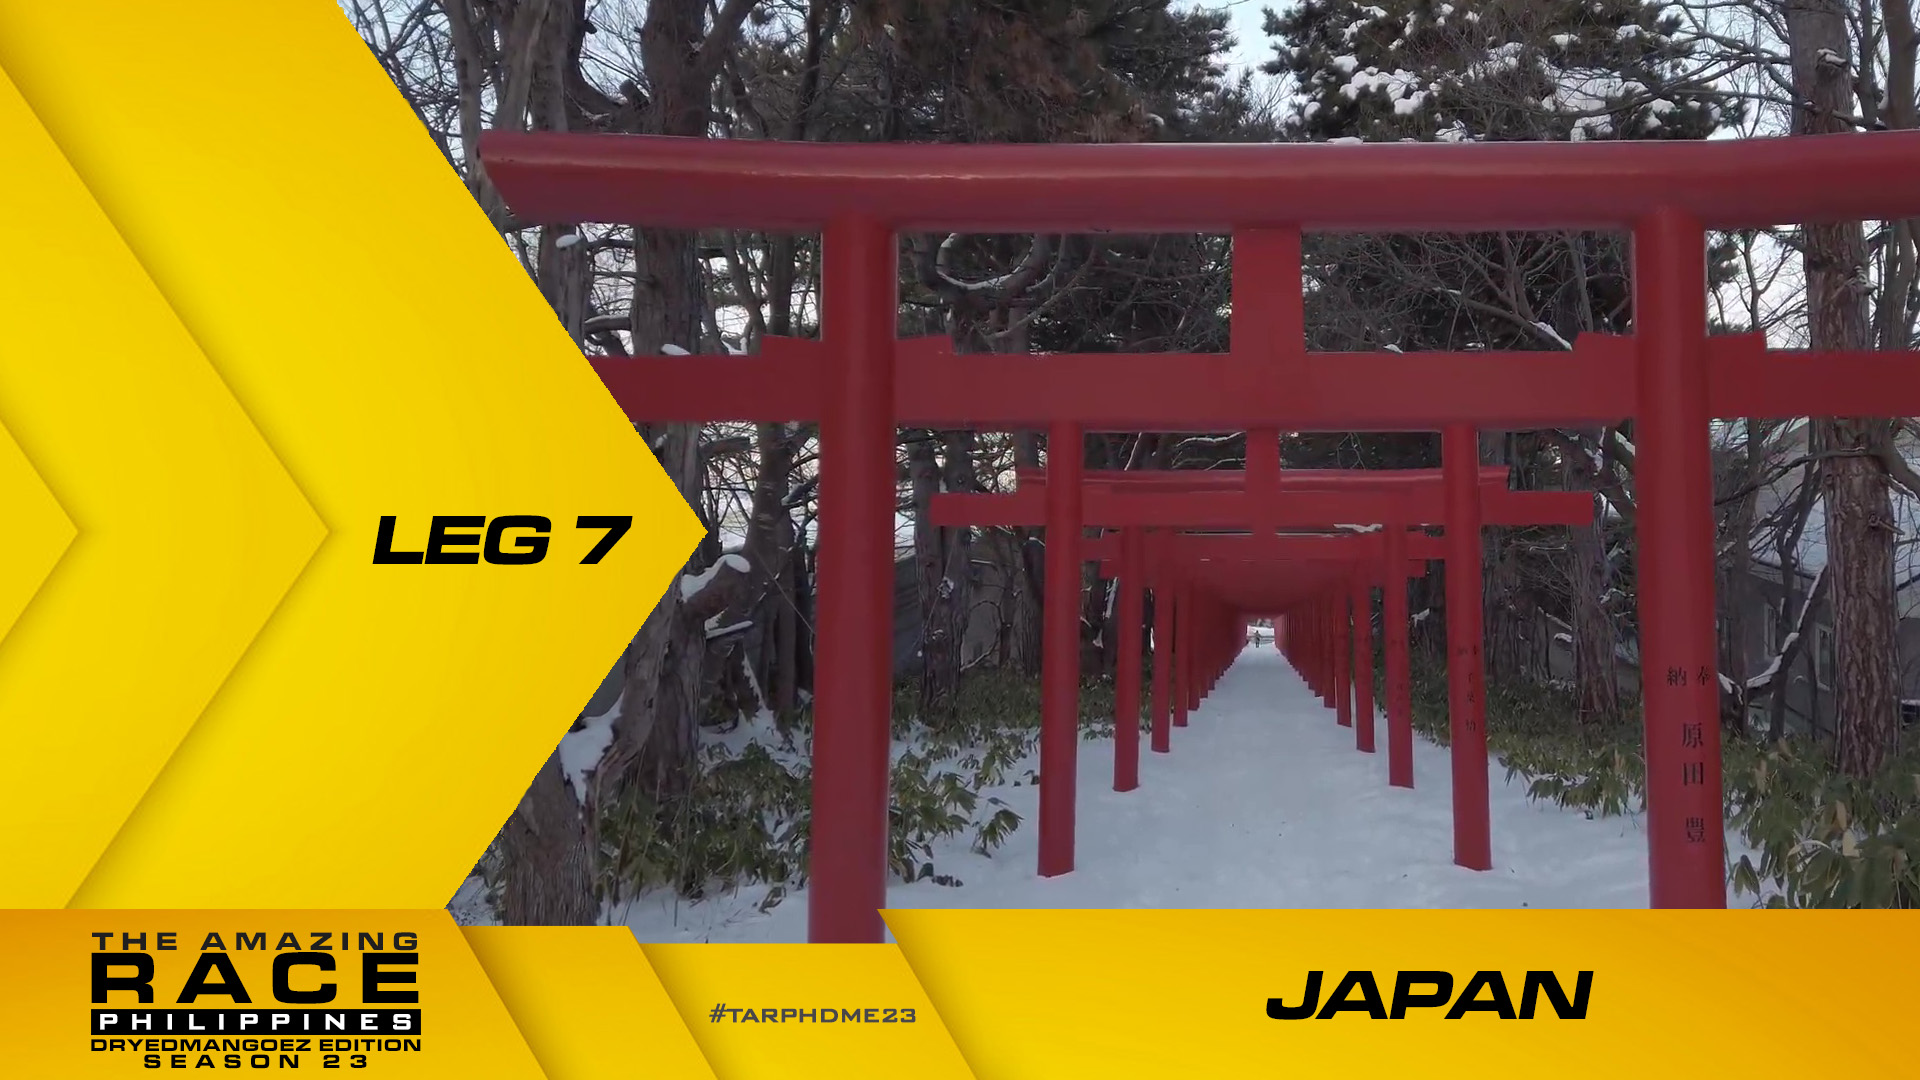 The Amazing Race Philippines: DryedMangoez Edition 23, Leg 7 – Japan